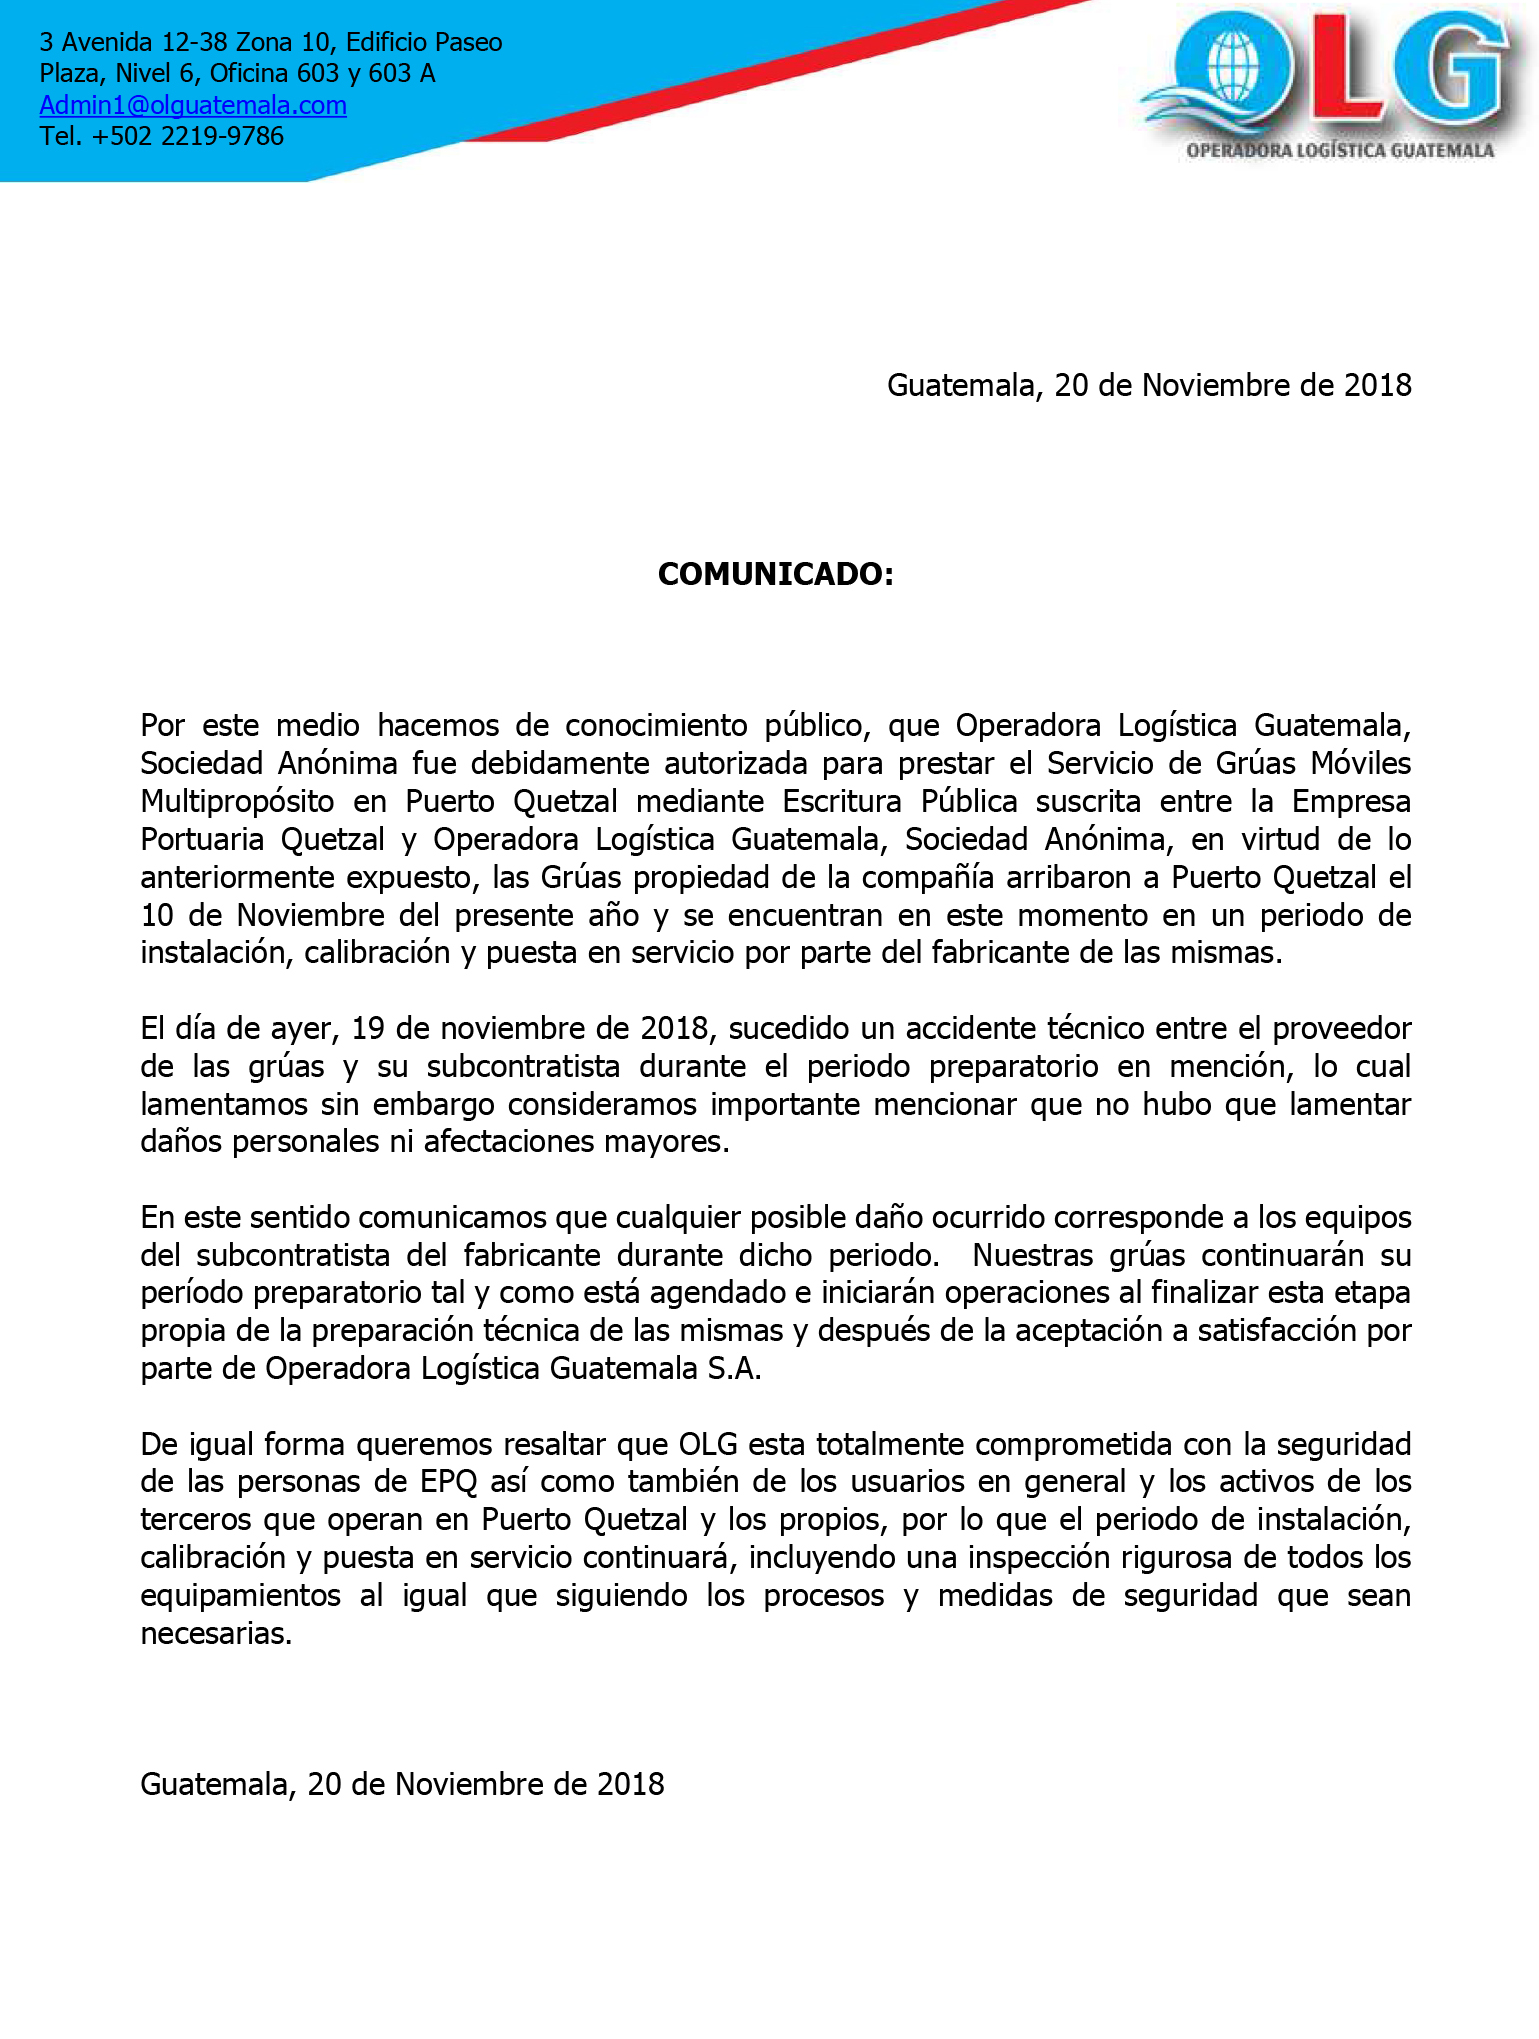 Comunicado emitido por Operadora Logística Guatemala, S. A. -OLG-